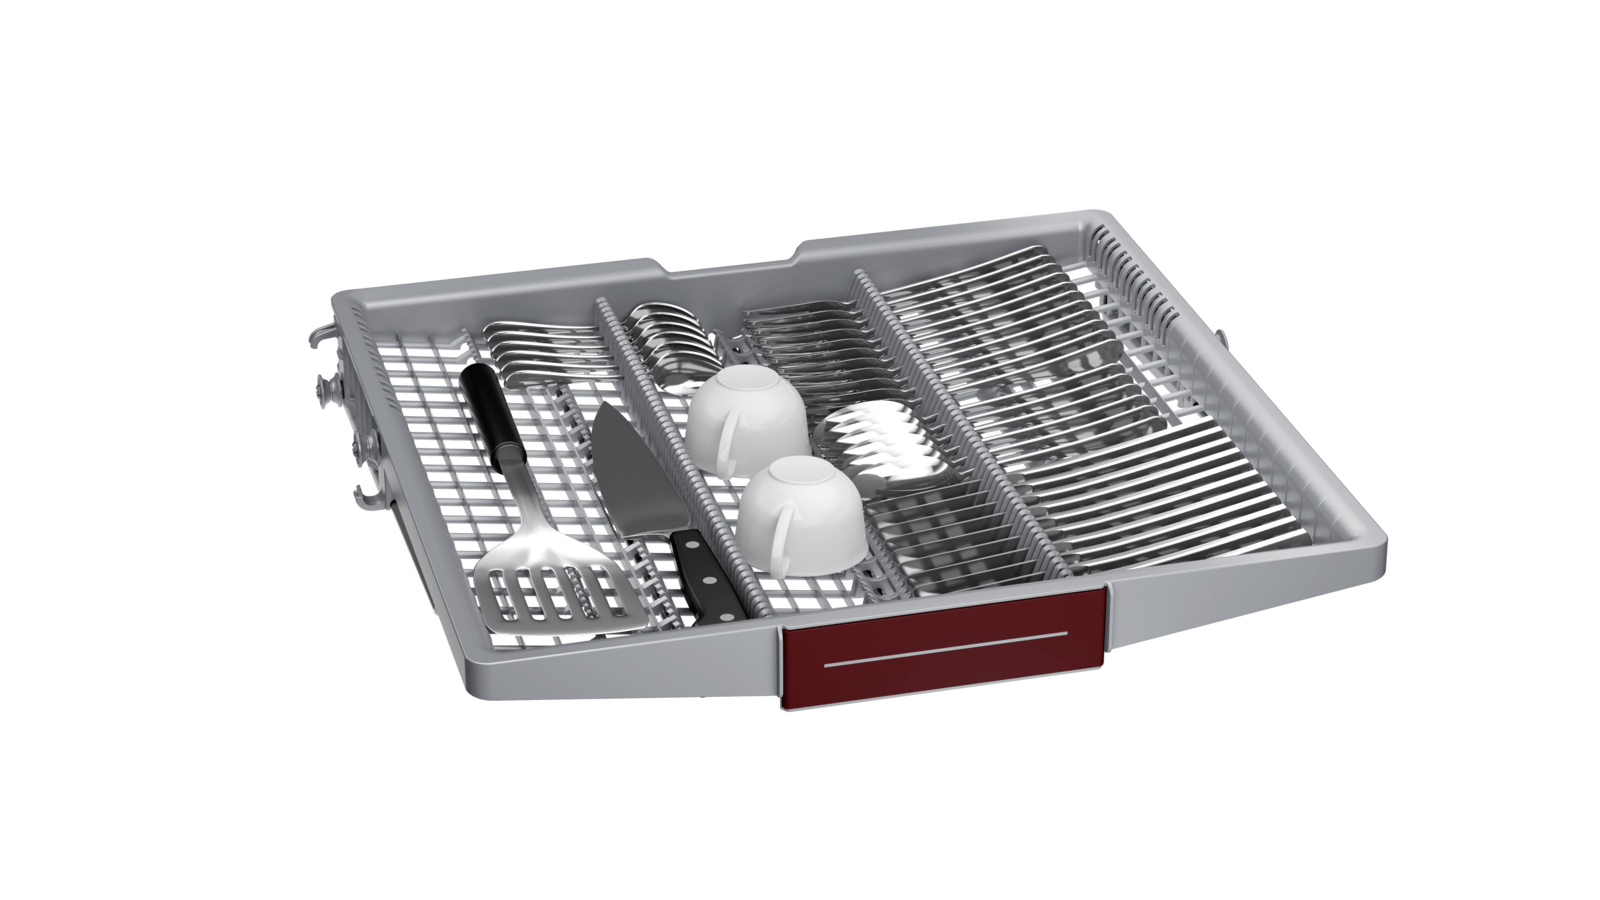 Neff Fully-Integrated Dishwasher S155HCX27G